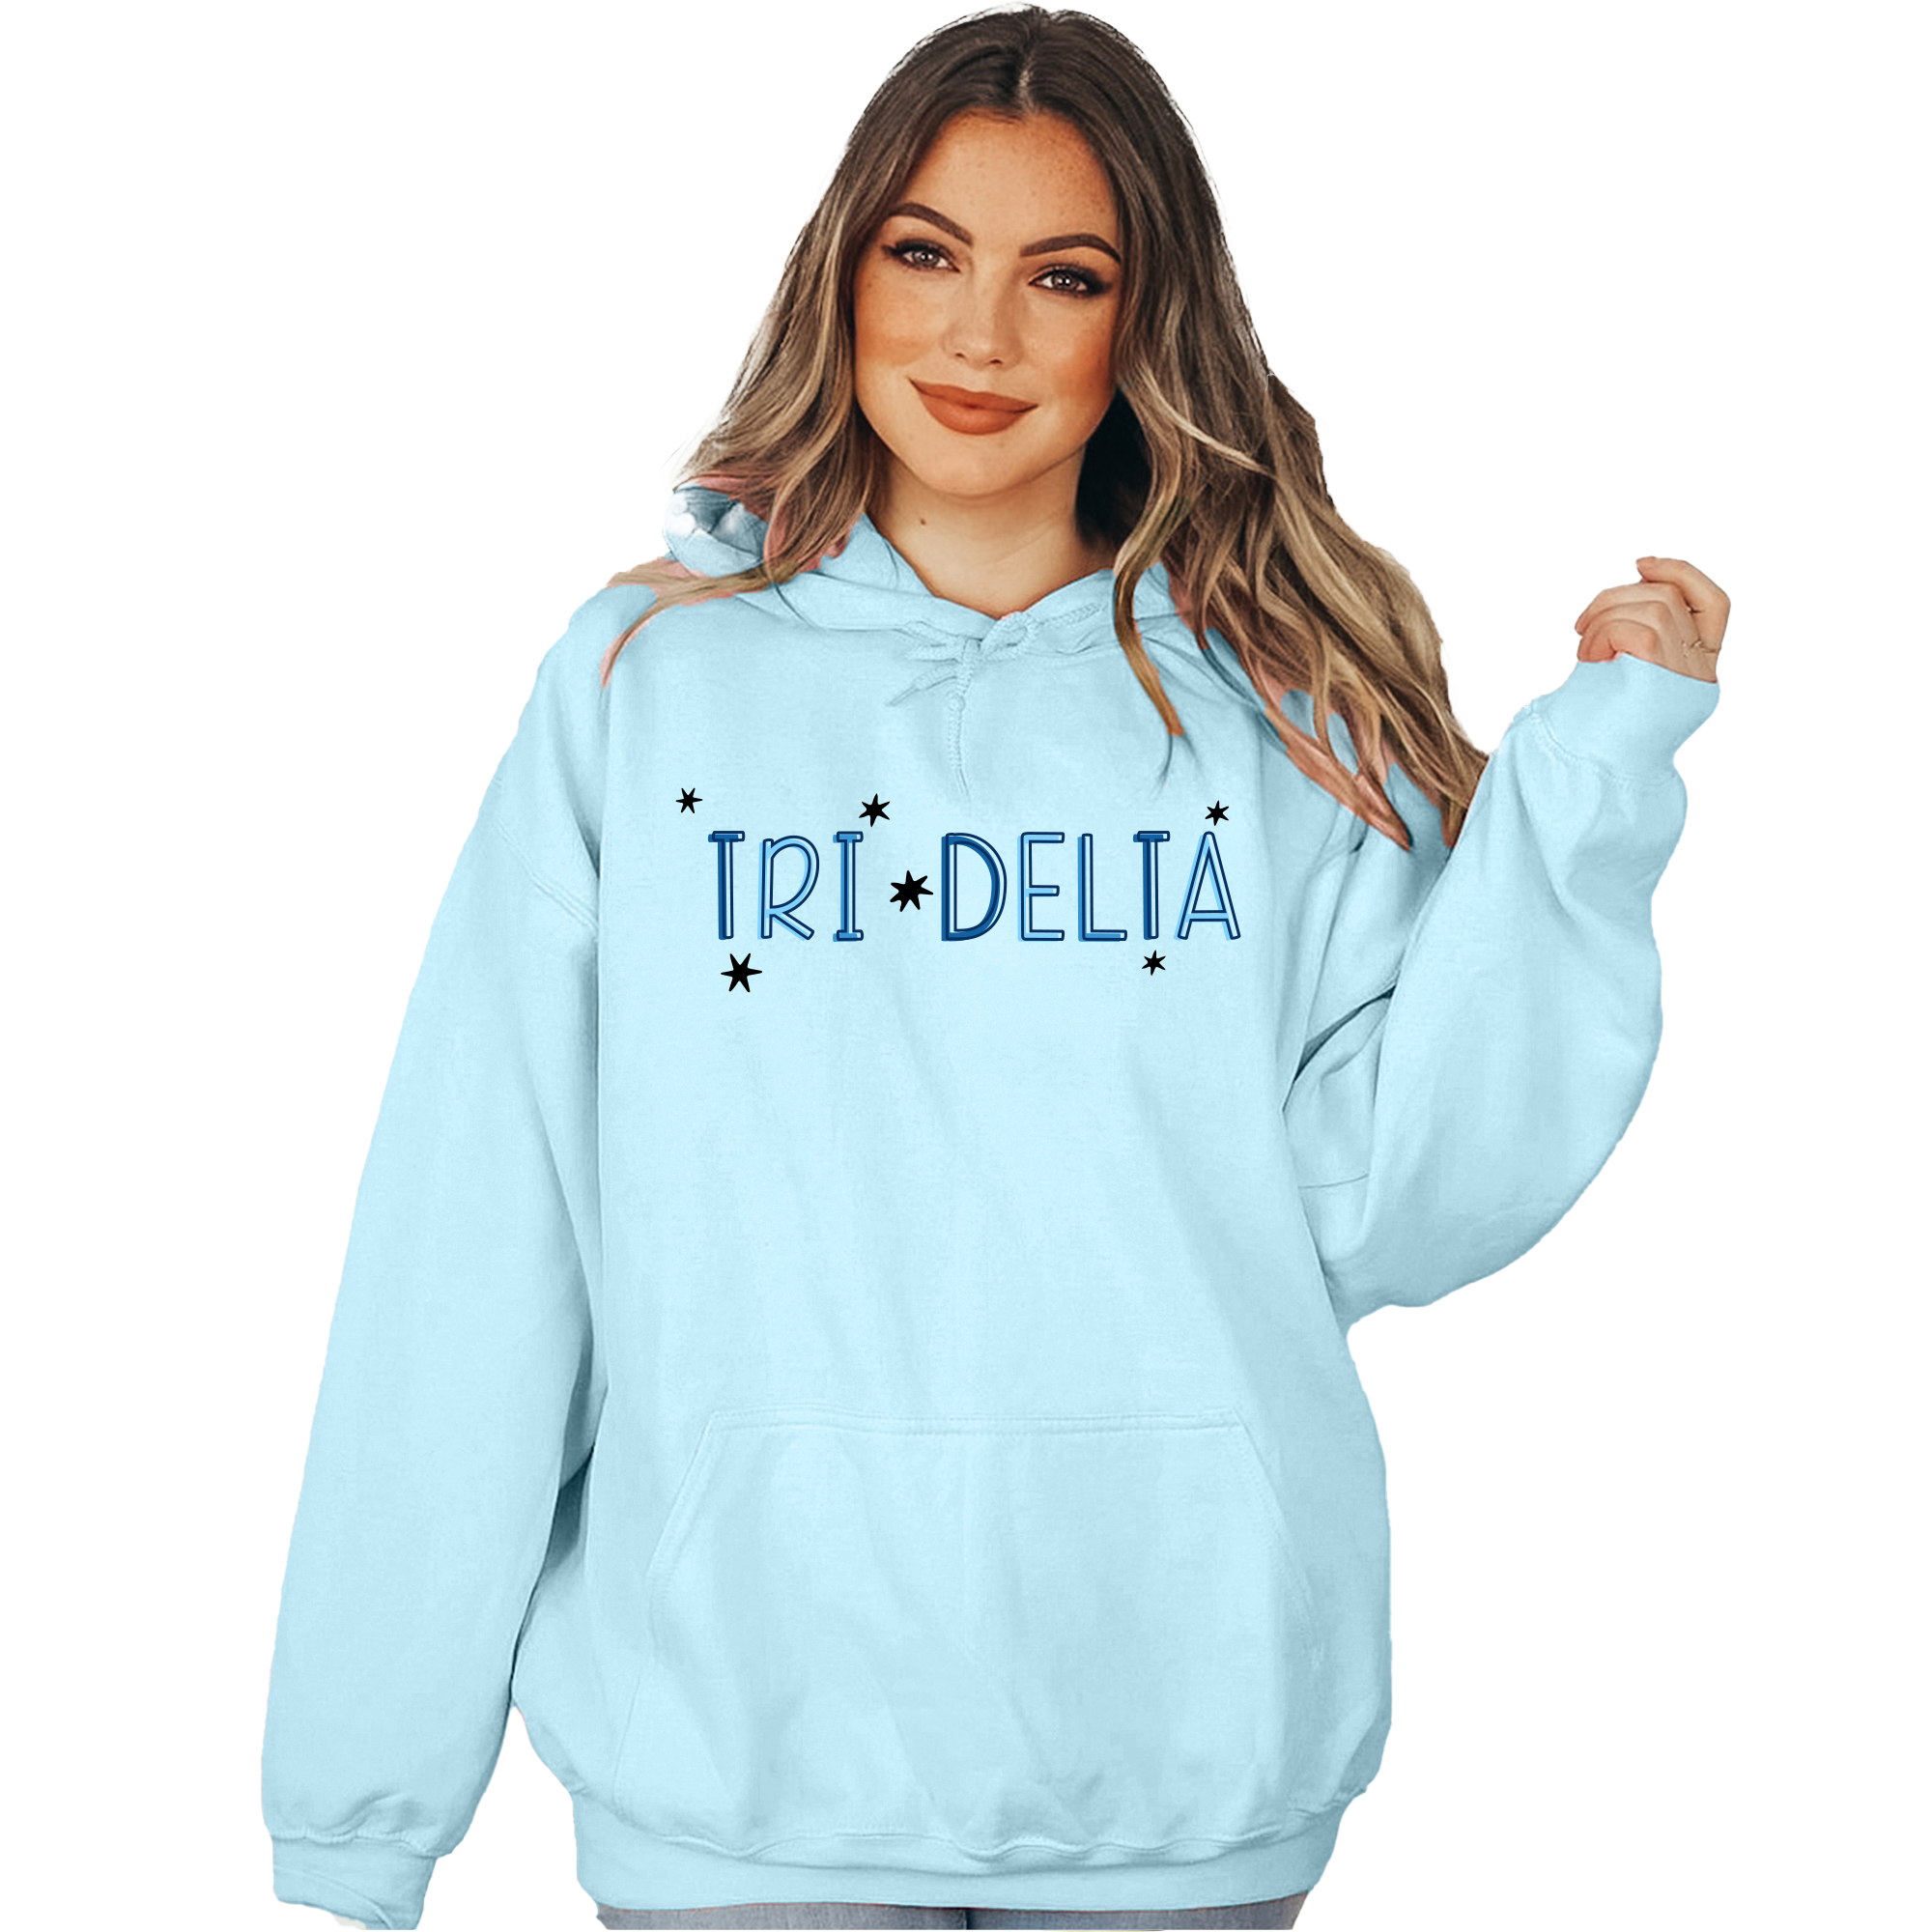 Delta Delta Delta Hoodie - Tri Delta, Sparkle, Blue Hoodie, Greek Apparel, Big Little Reveal, Initiation - Go Greek Chic